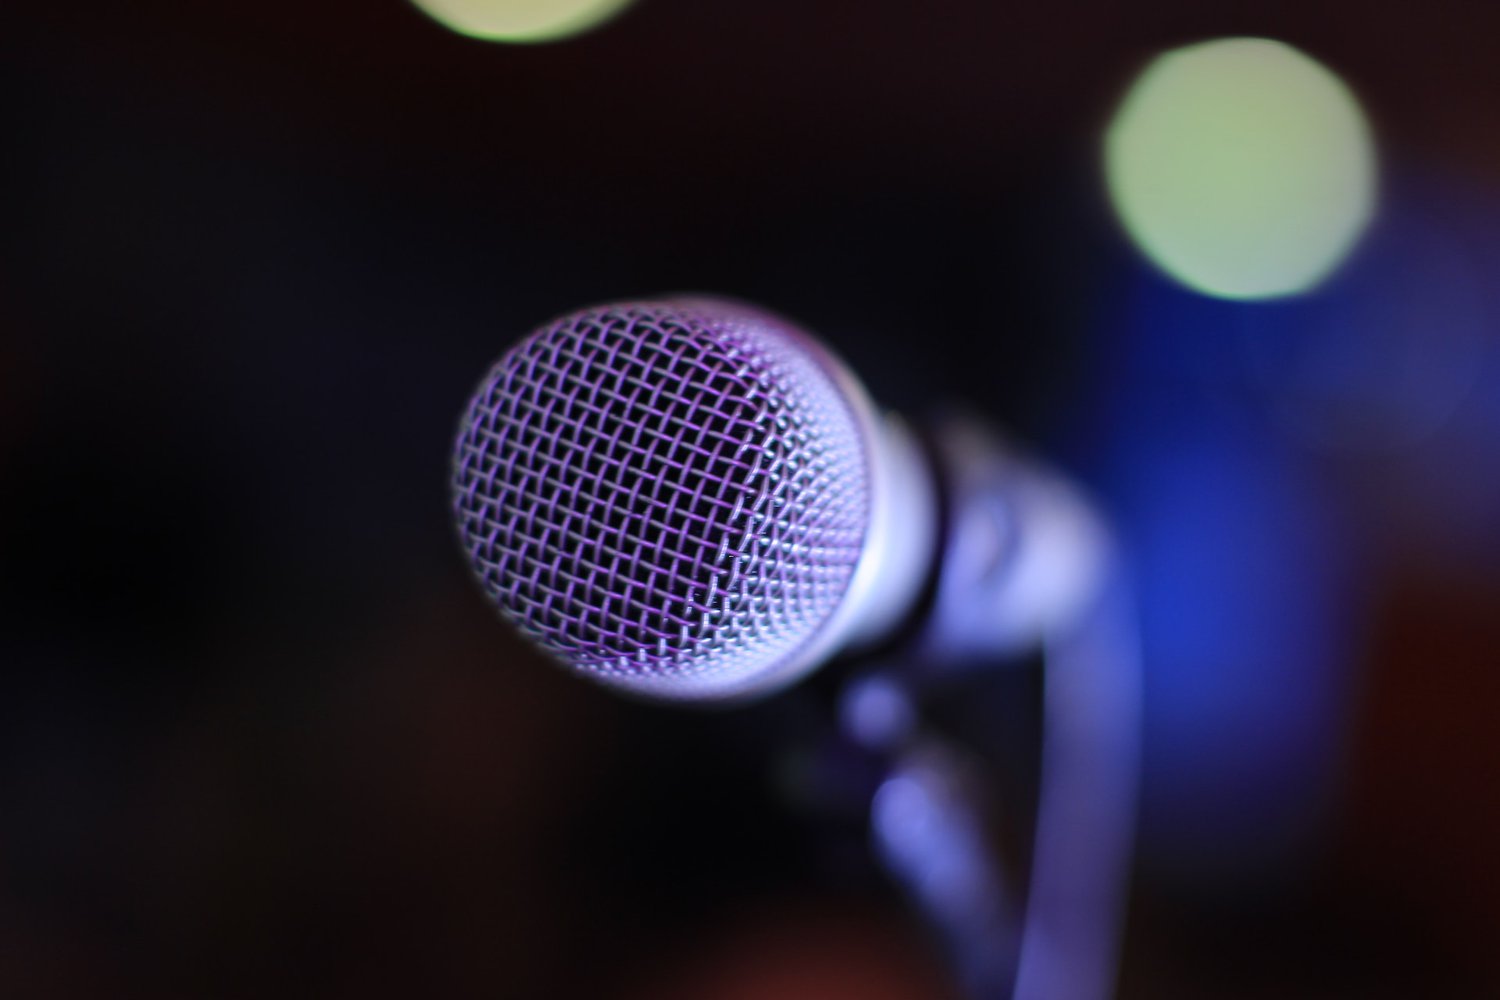 A microphone against a dark background